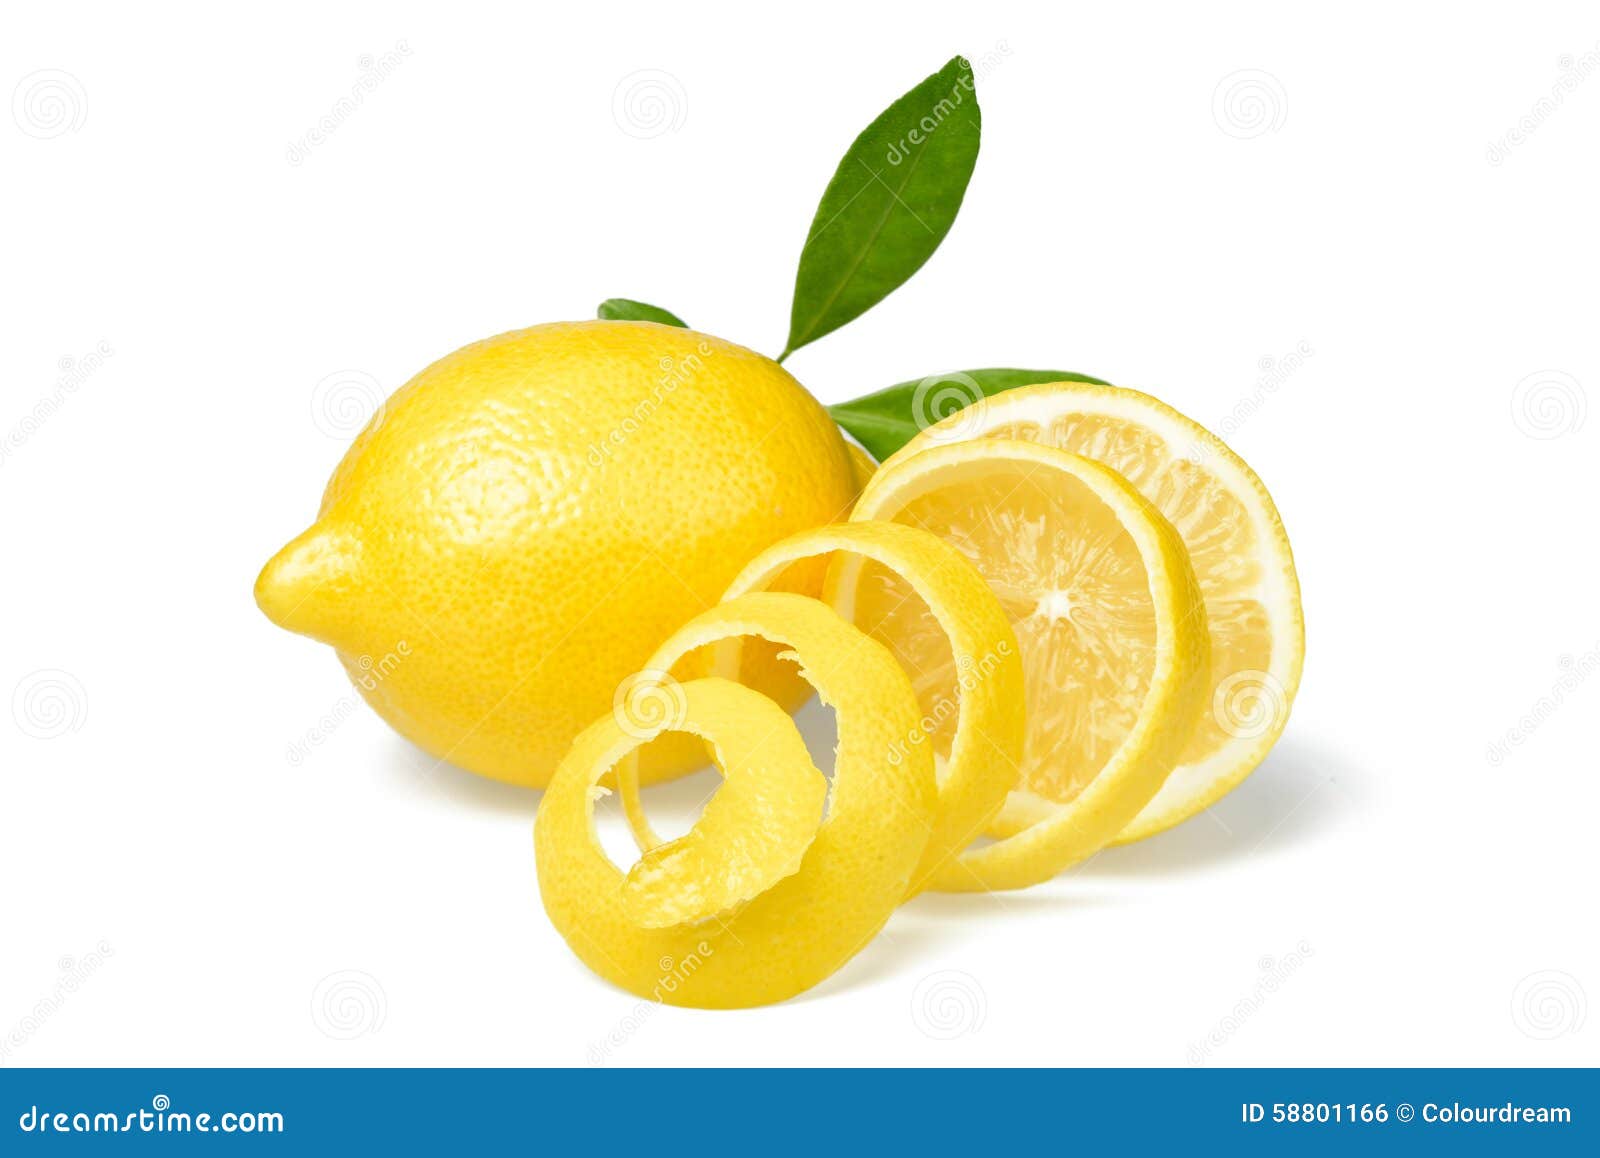 fresh lemon and lemon peel